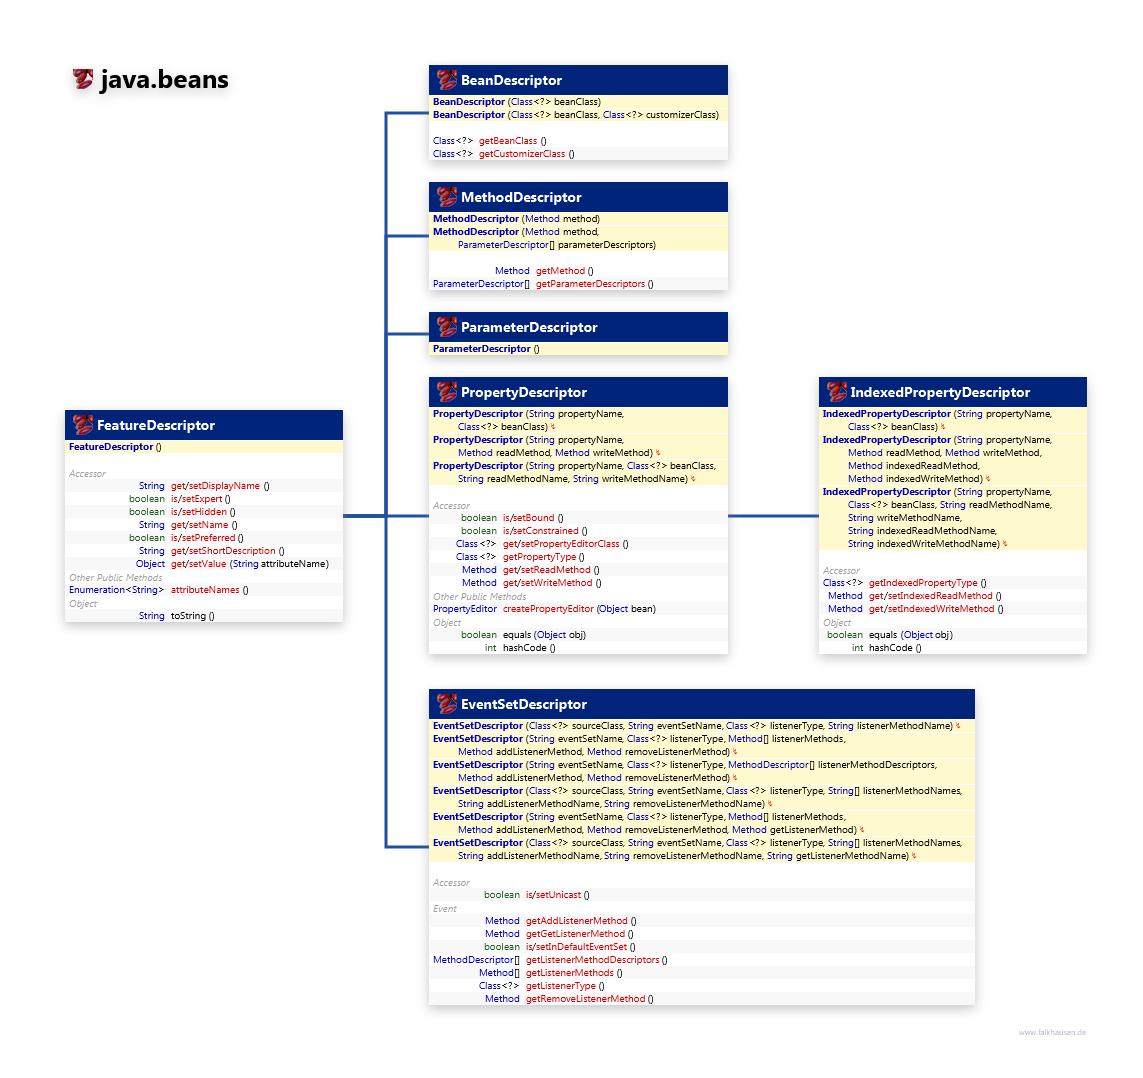 java.beans FeatureDescriptor class diagram and api documentation for Java 8